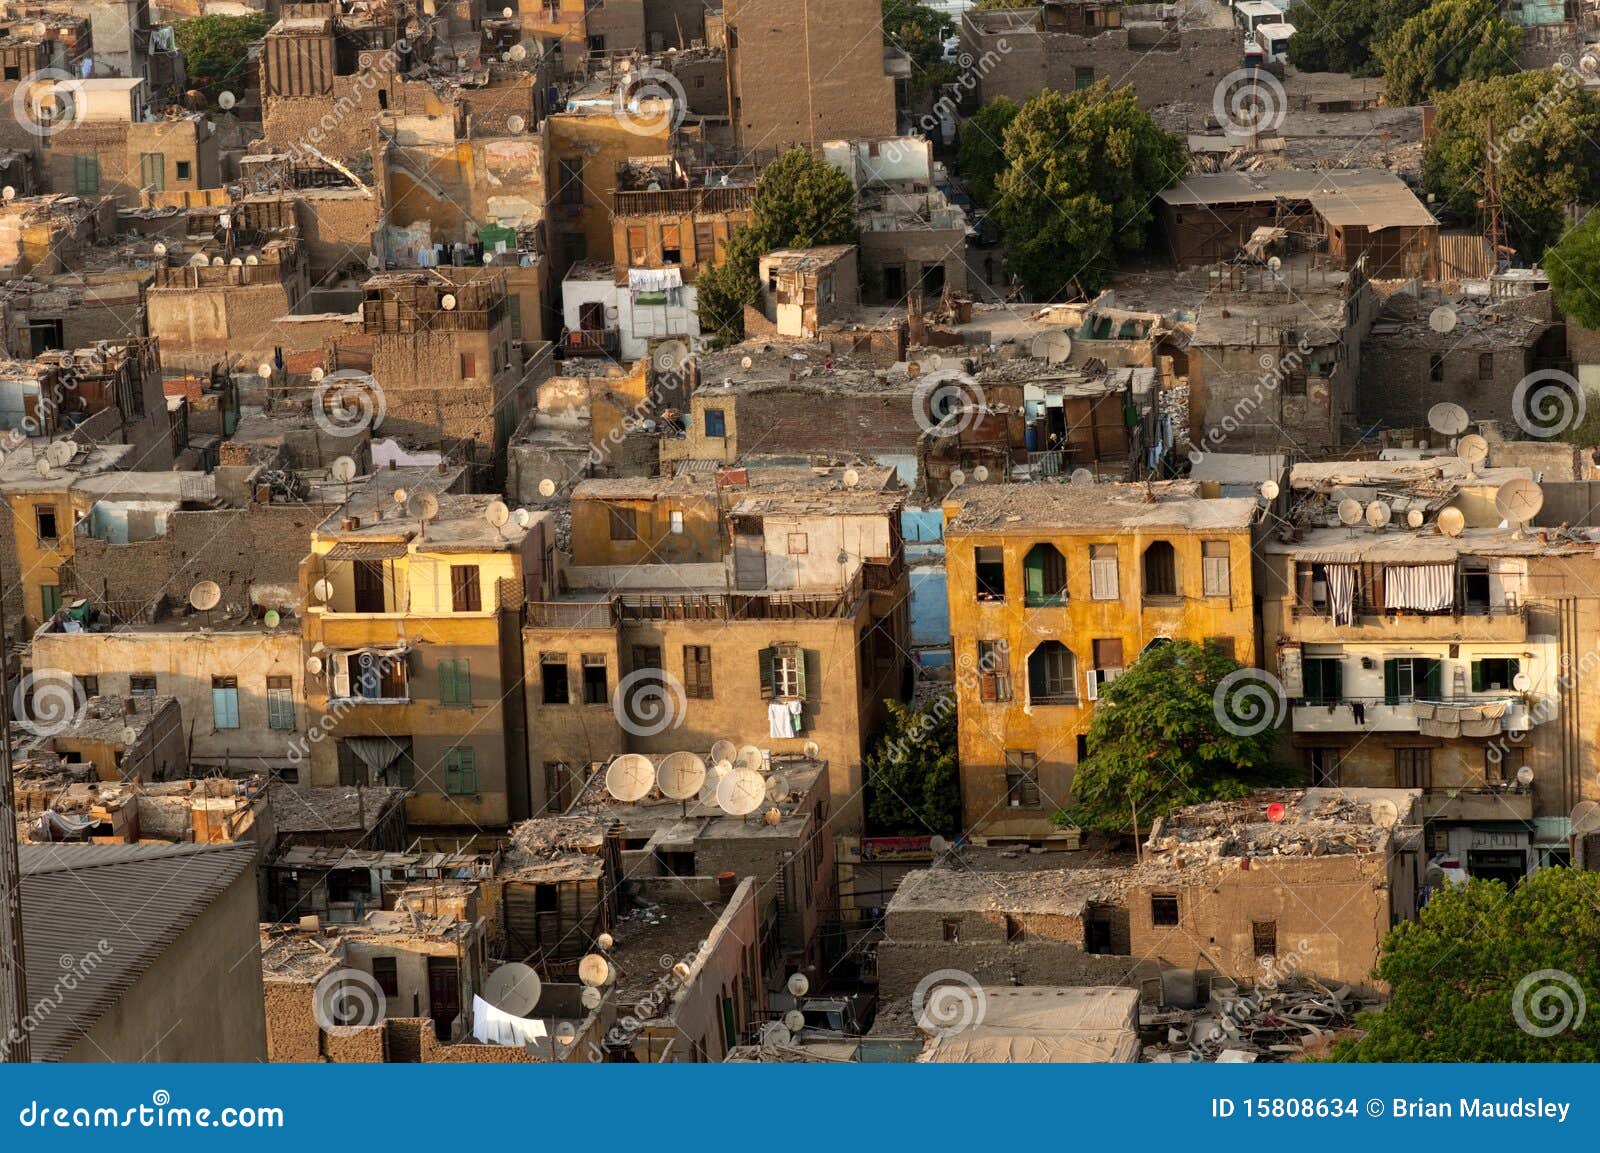 slum cairo roofs with satellite dishes.